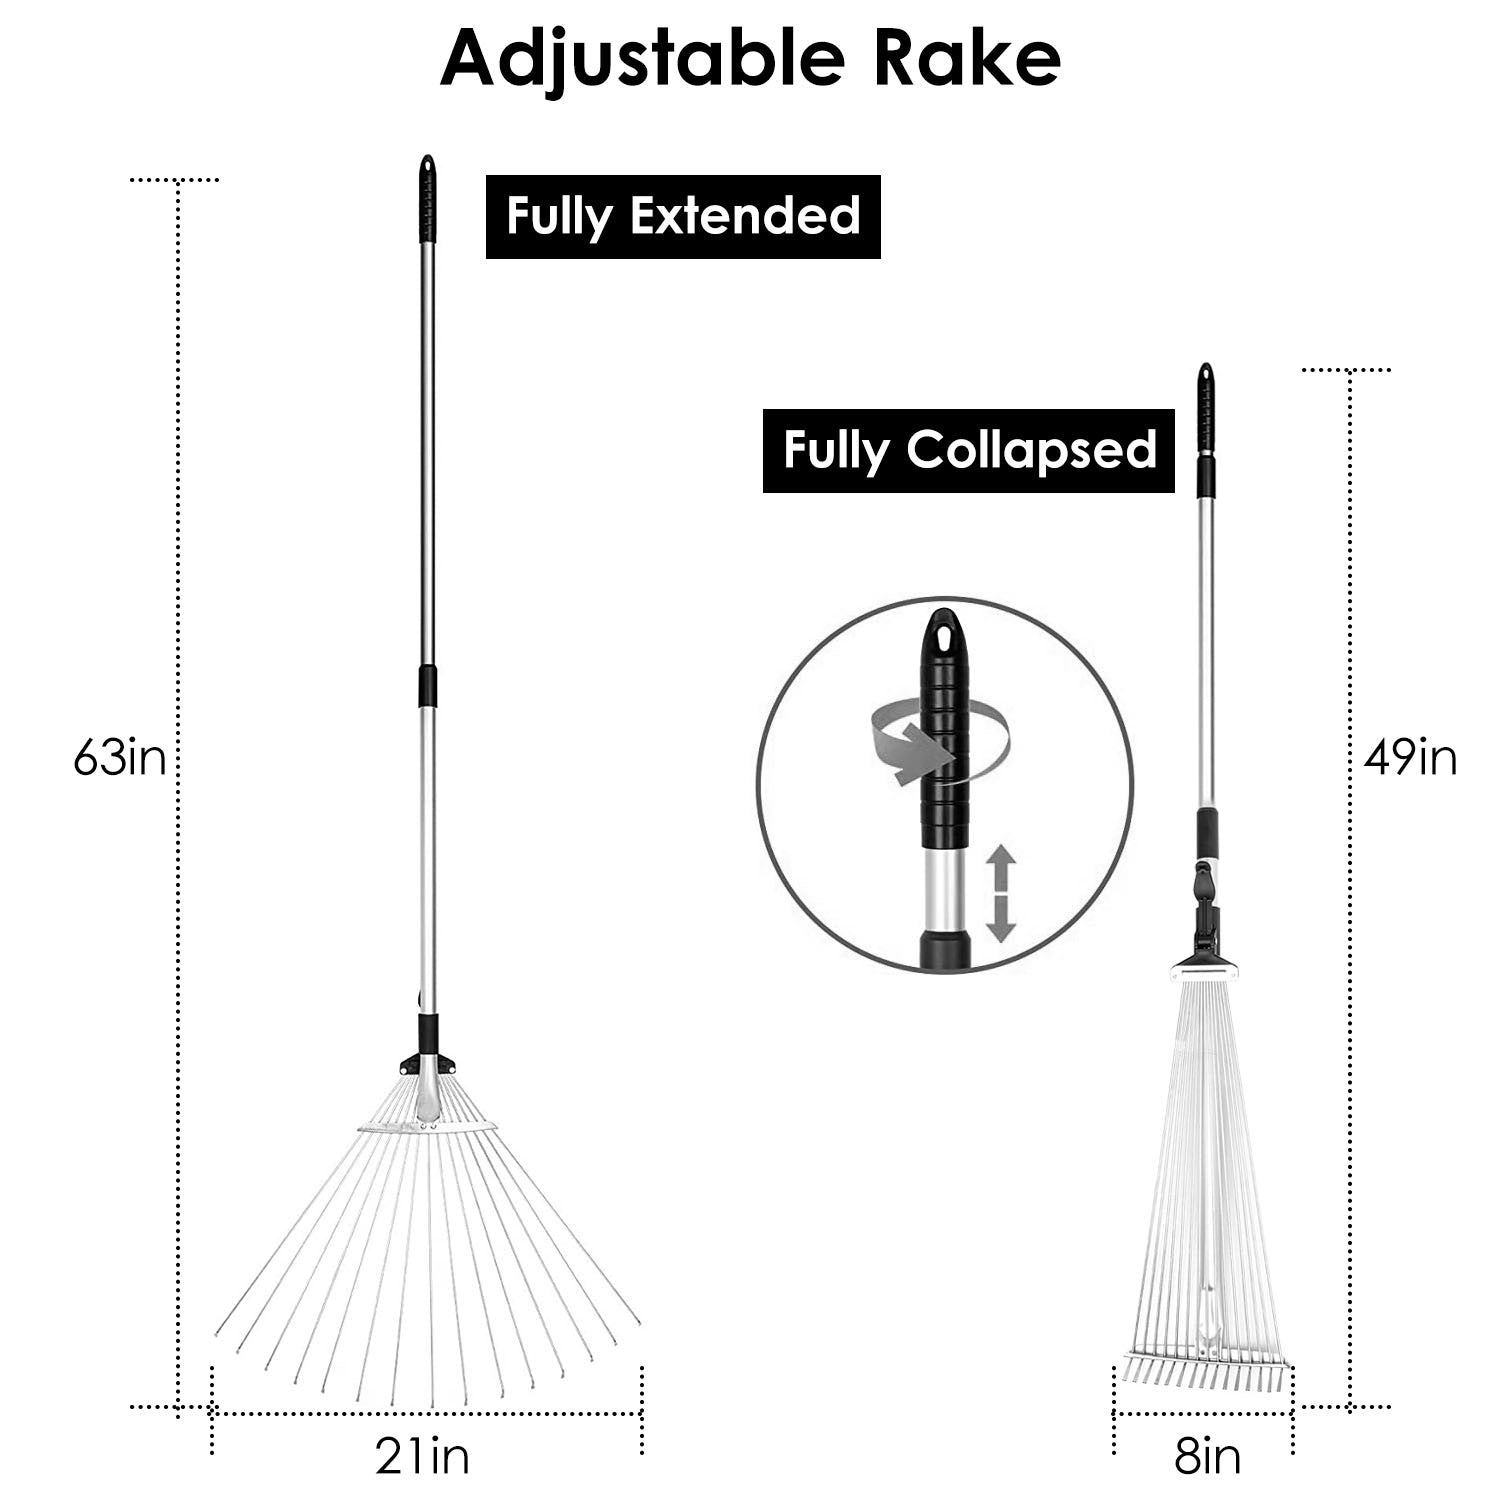 63in Adjustable Rake Dimensions